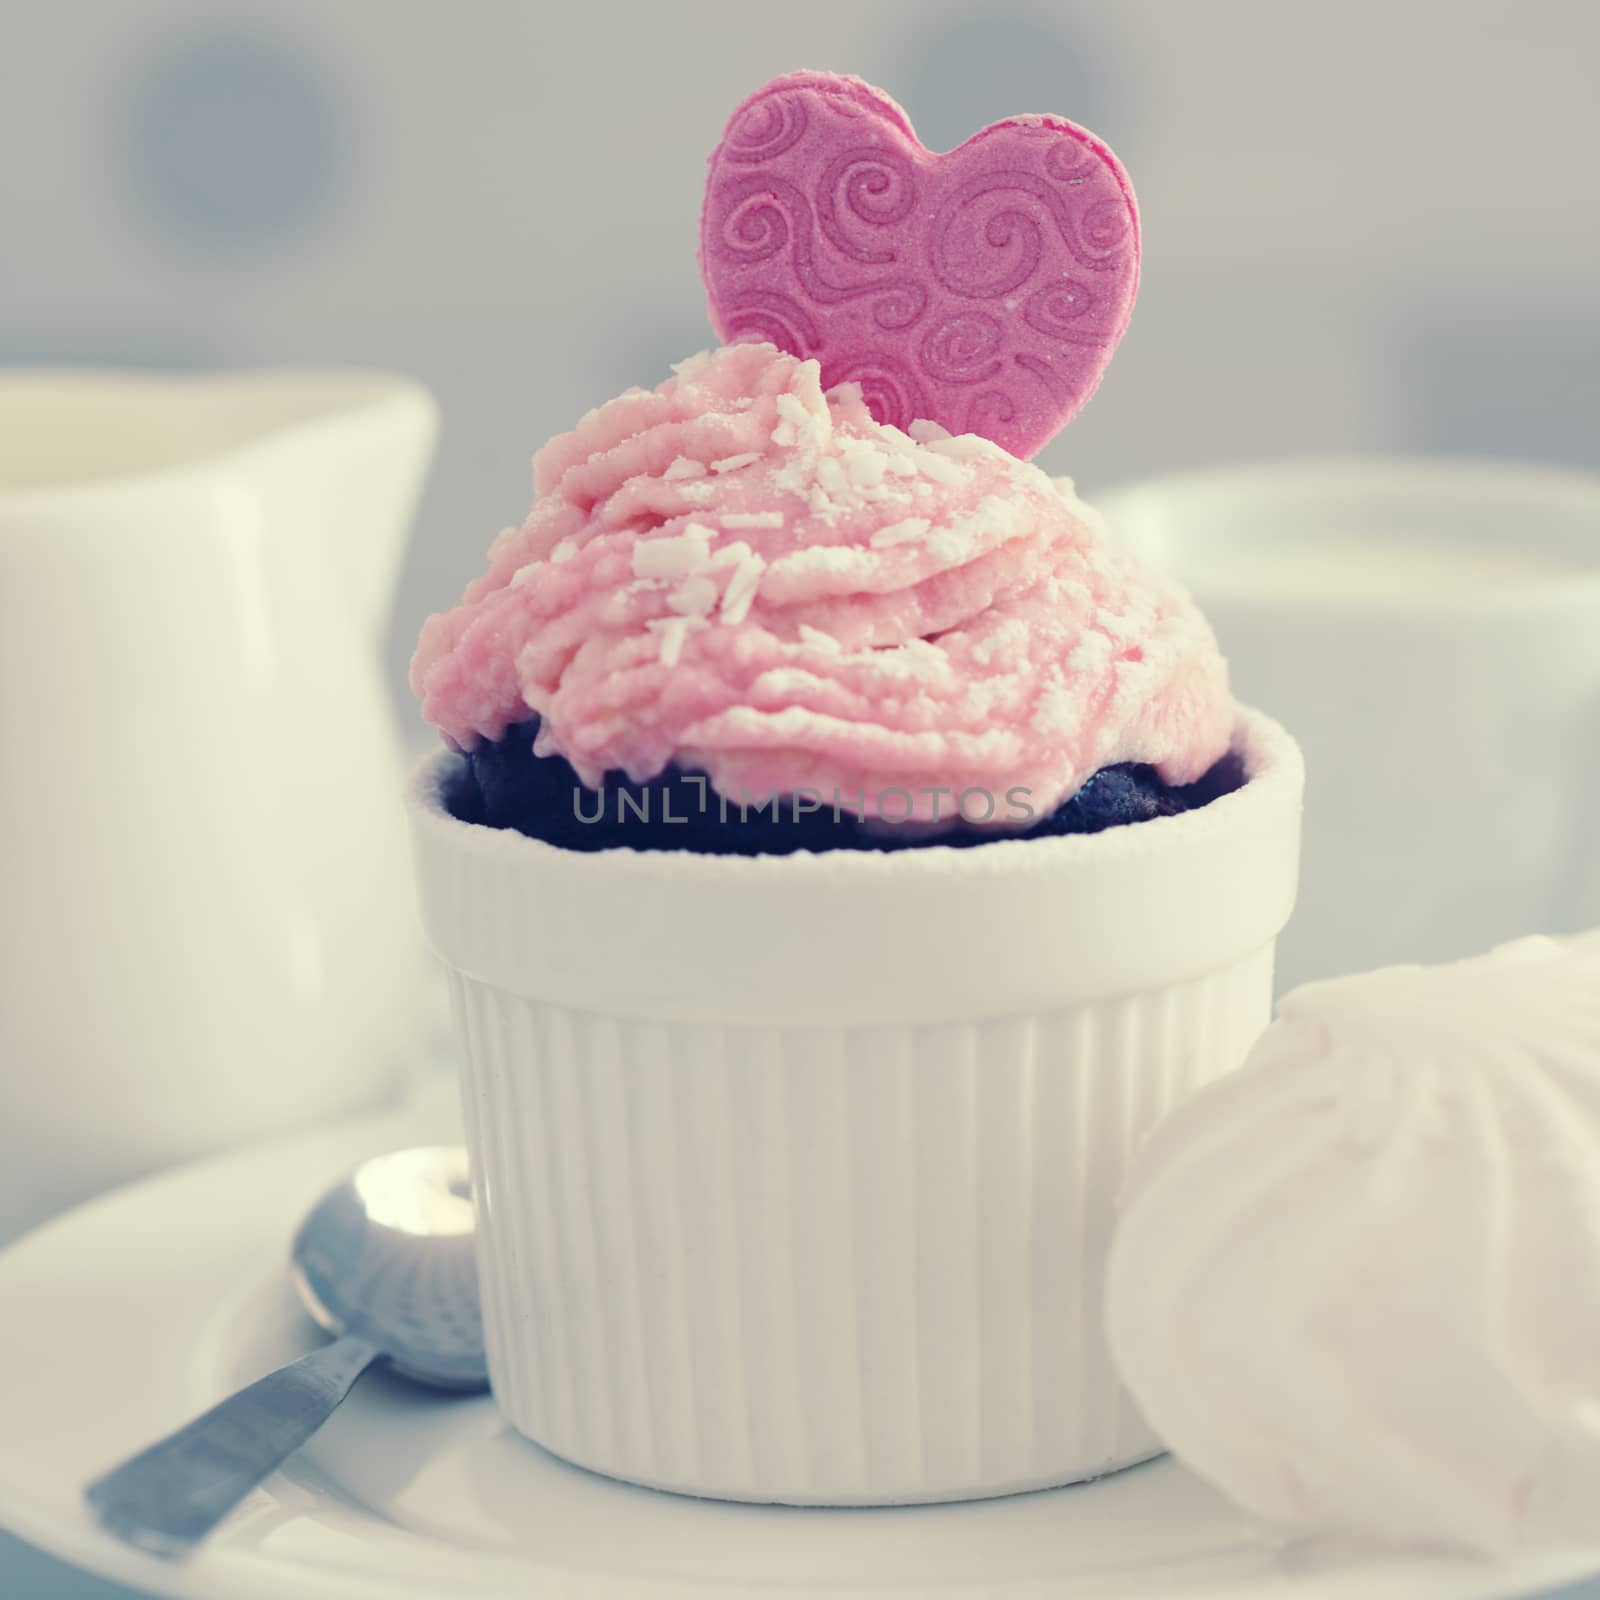 Cupcake by alenkasm